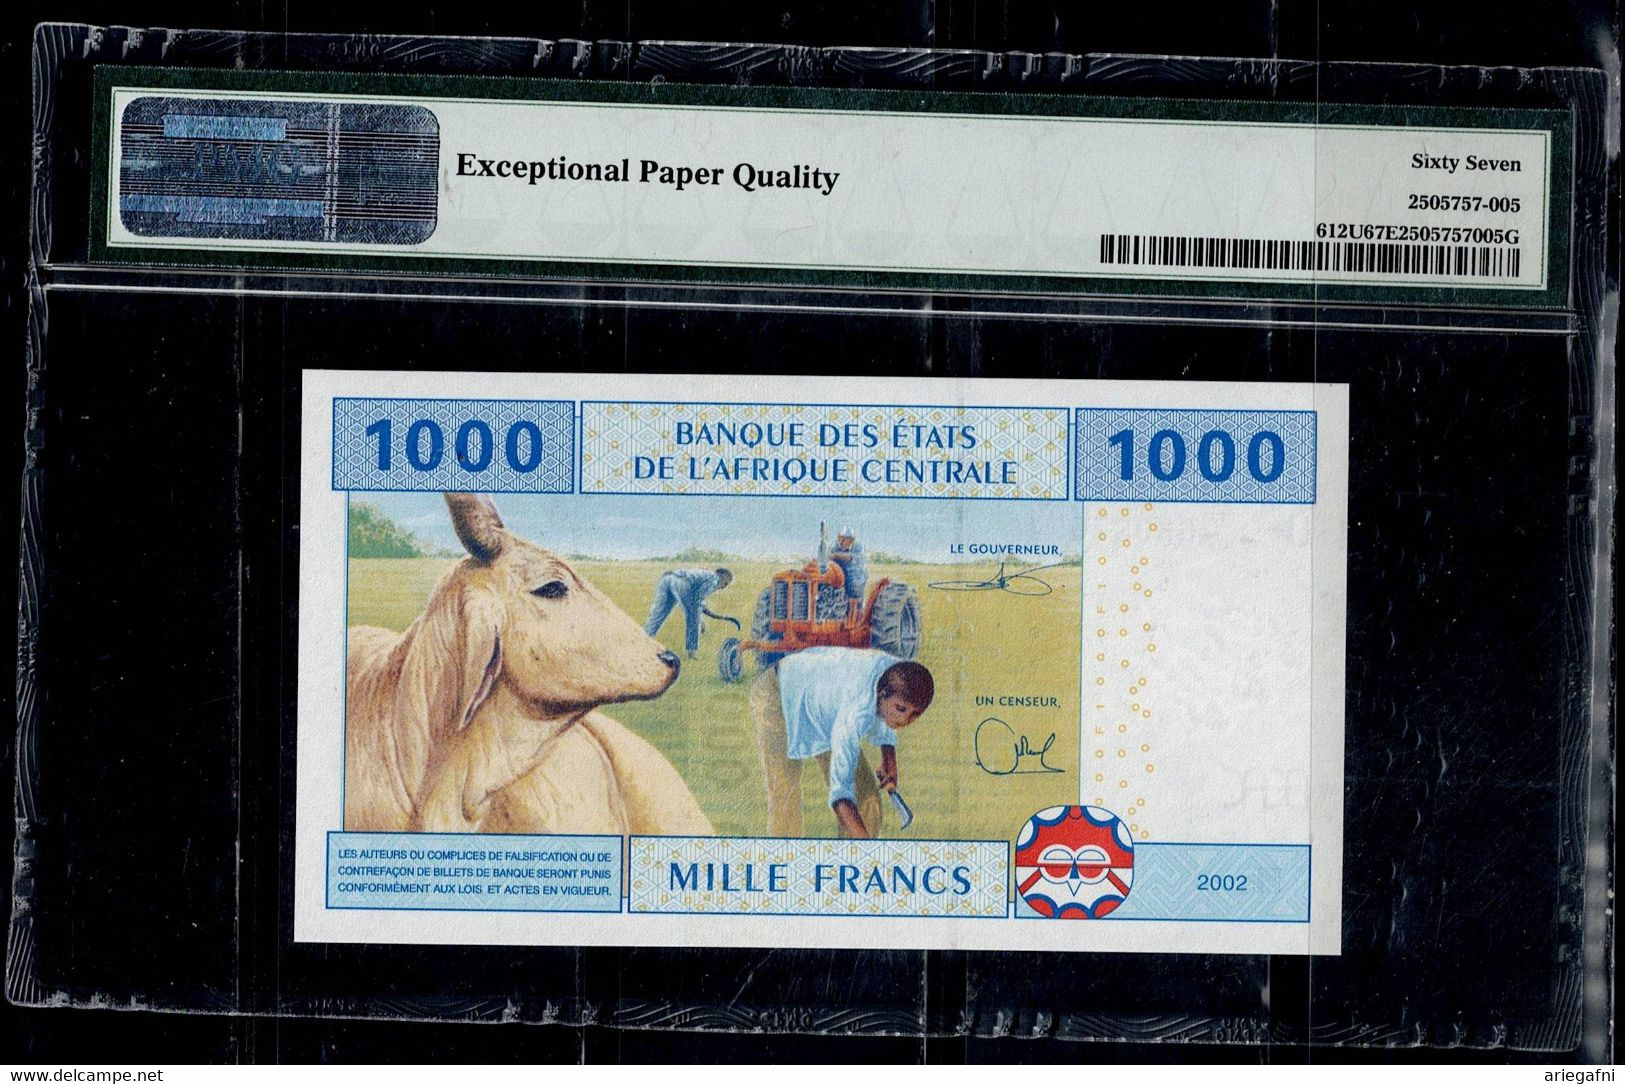 CAMEROON 2002 BANKNOT 1000 FRANCS PMG 67 UNC !! - Cameroun